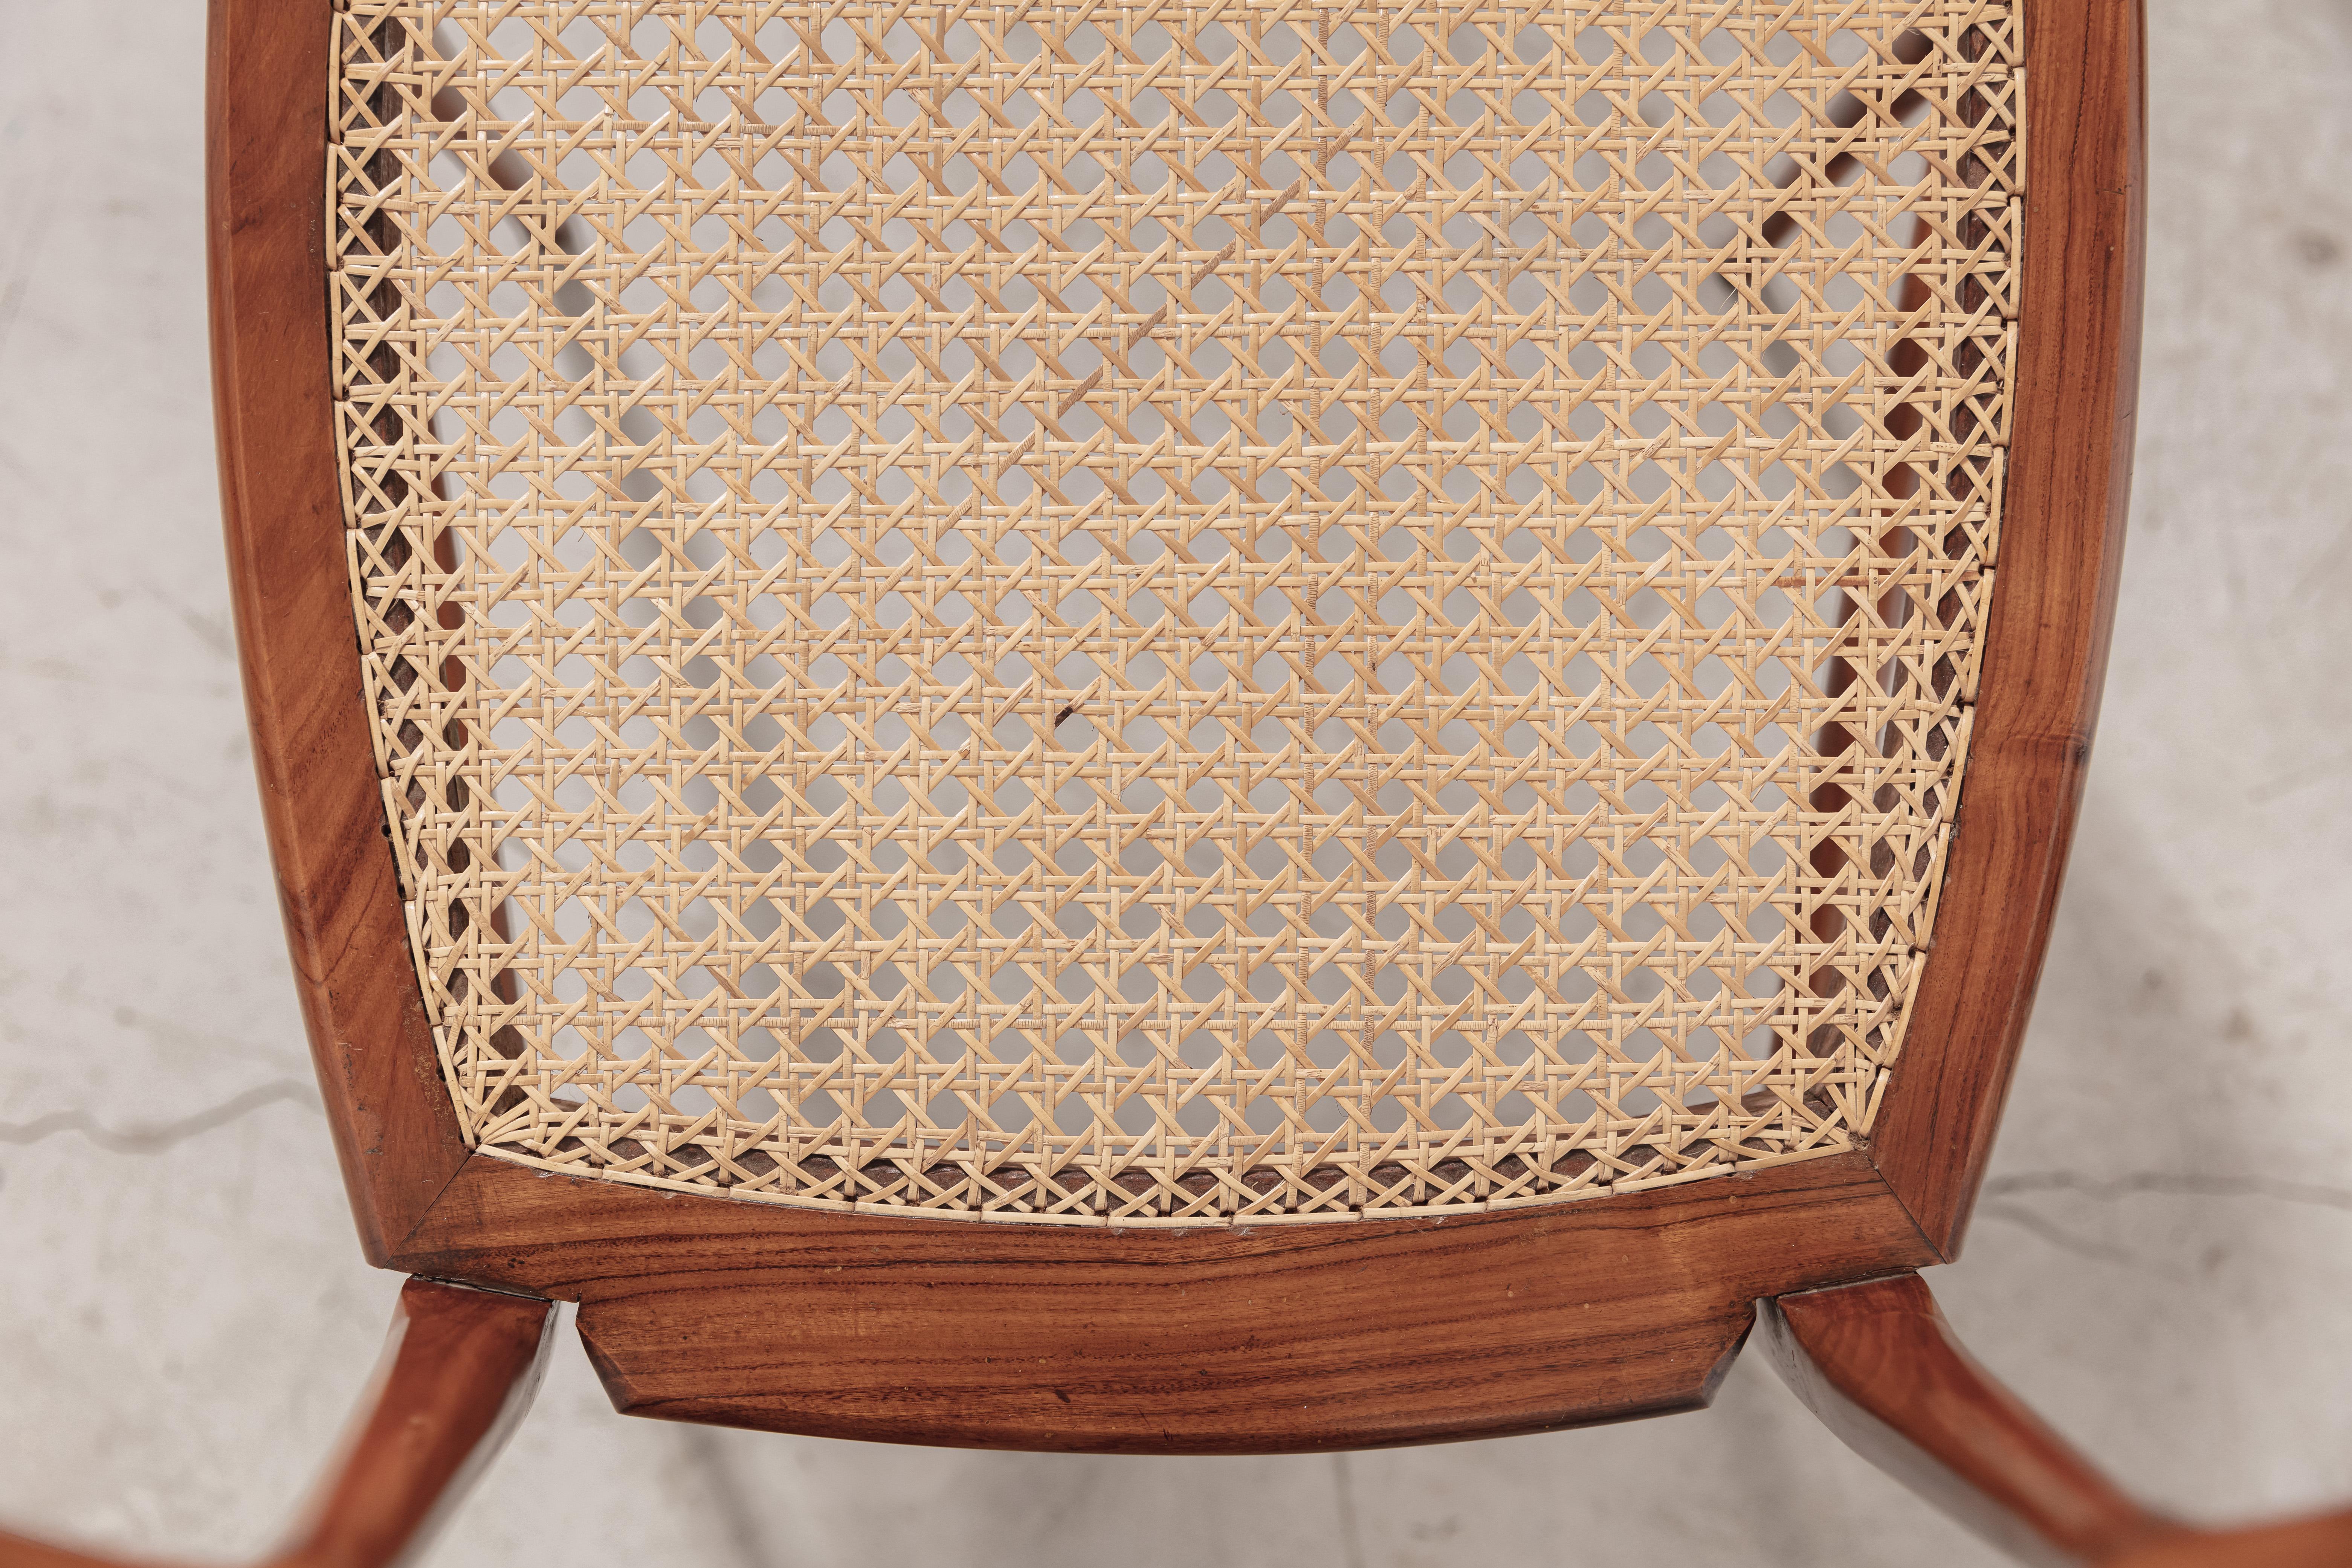 Cane Ernesto Hauner Caviuna Chair, Brazilian Midcentury Design, 1950 For Sale